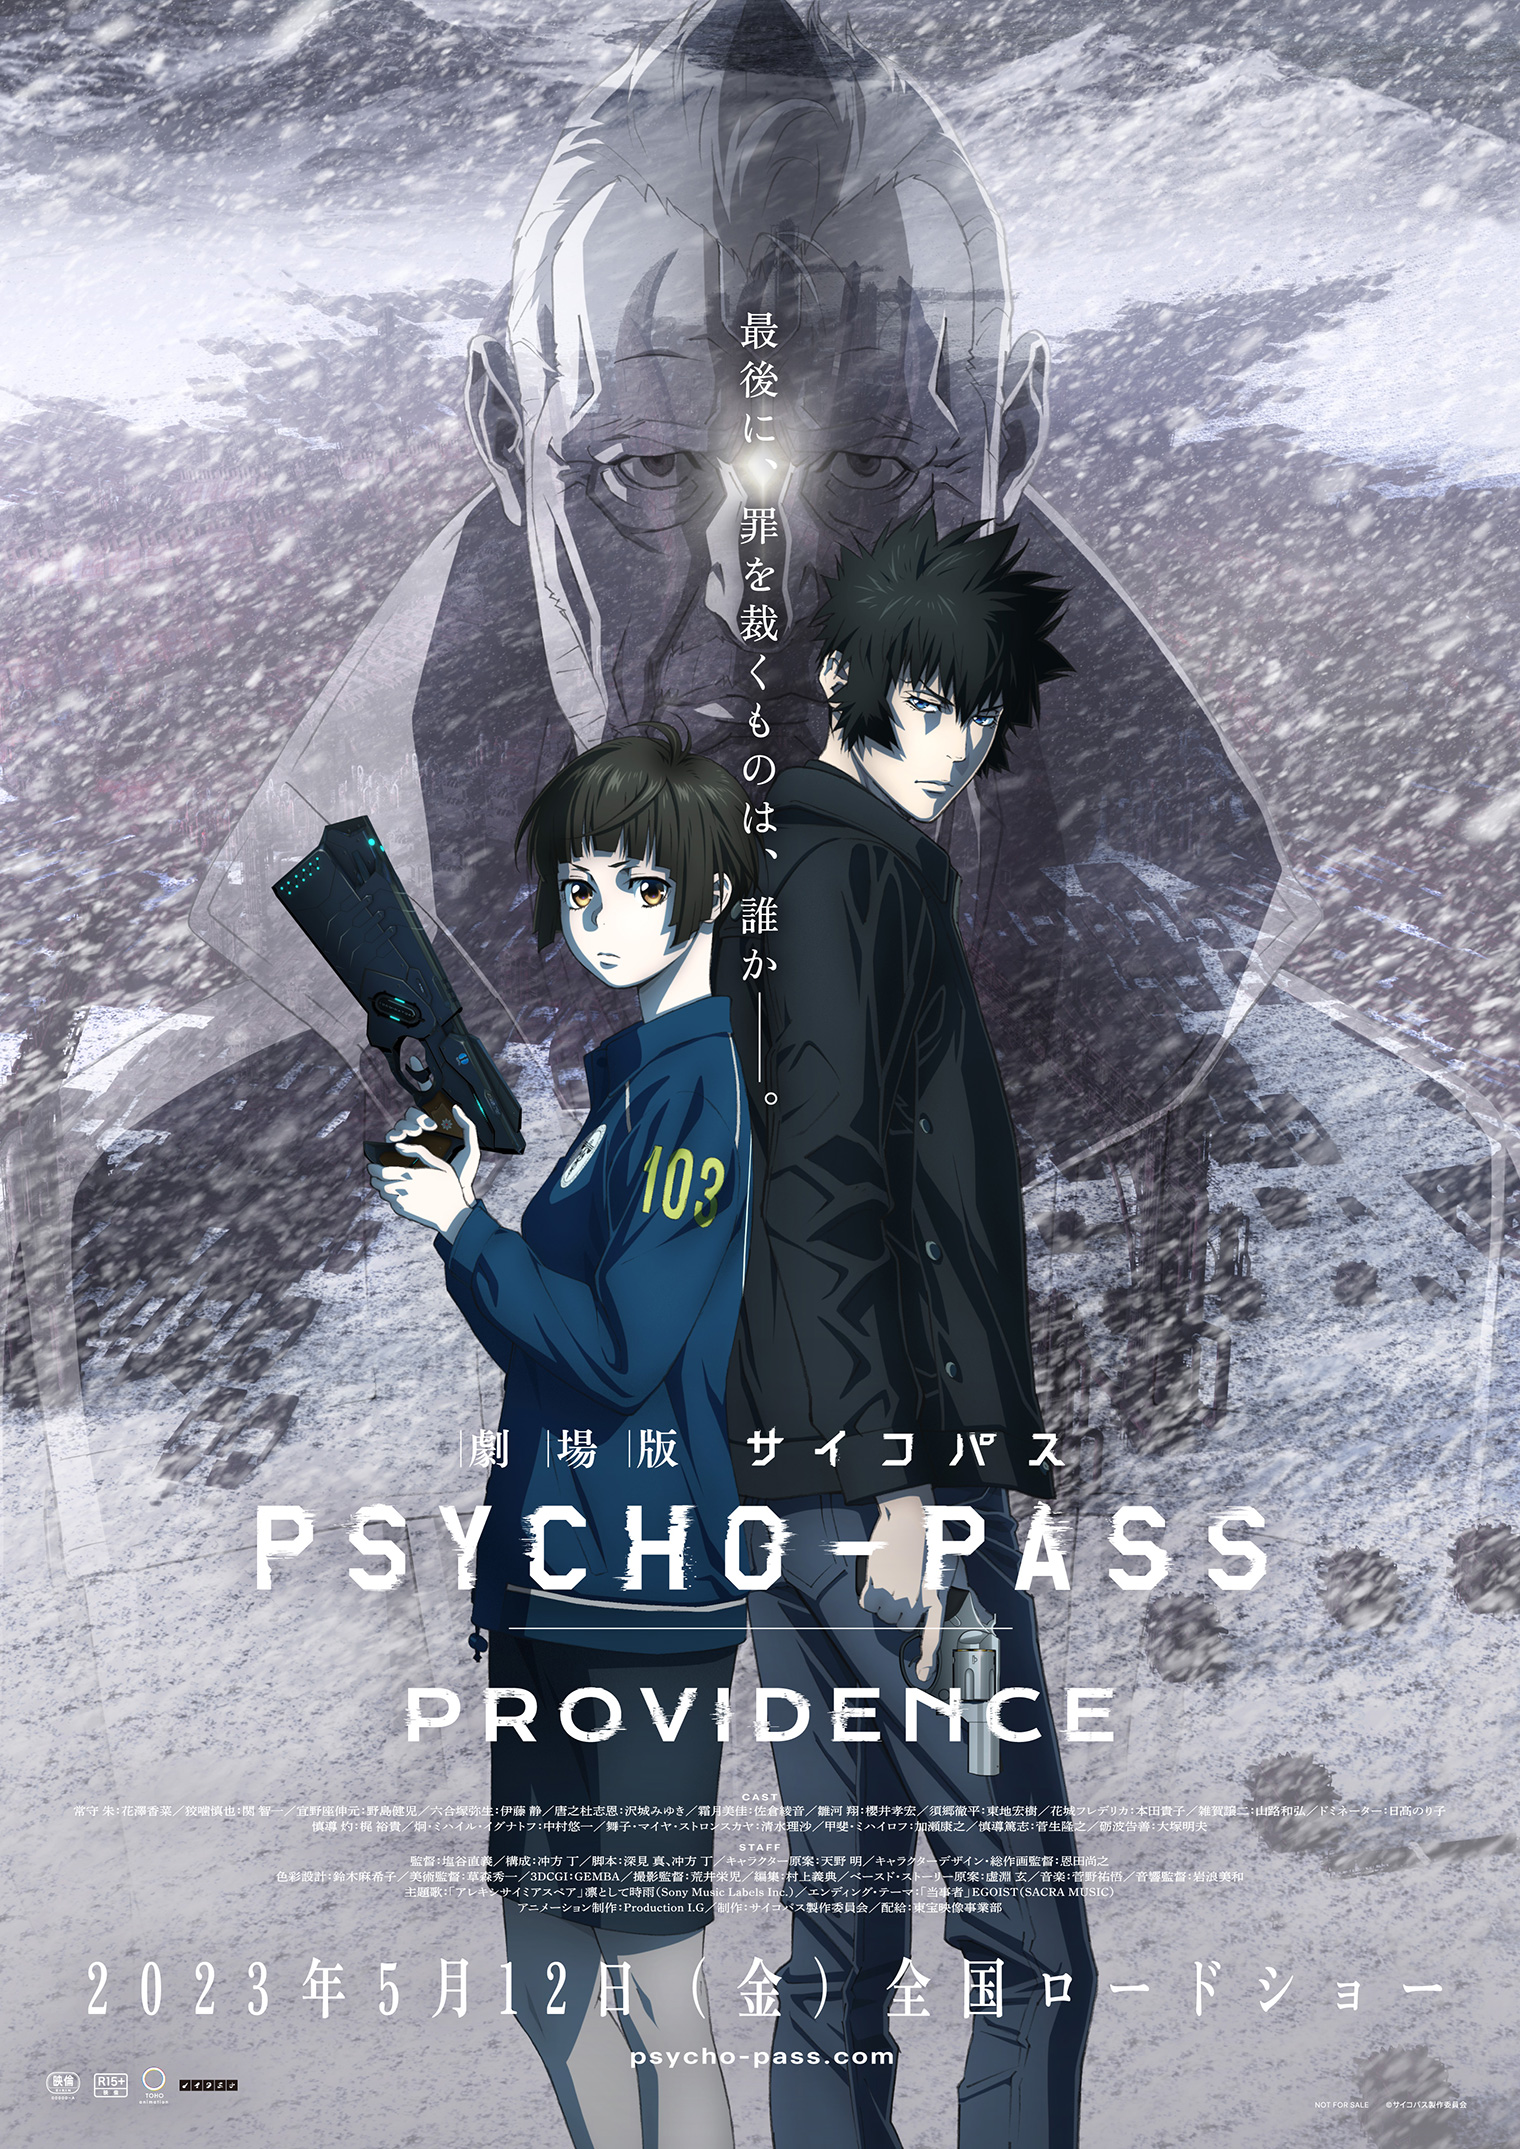 psycho-pass providence trailer